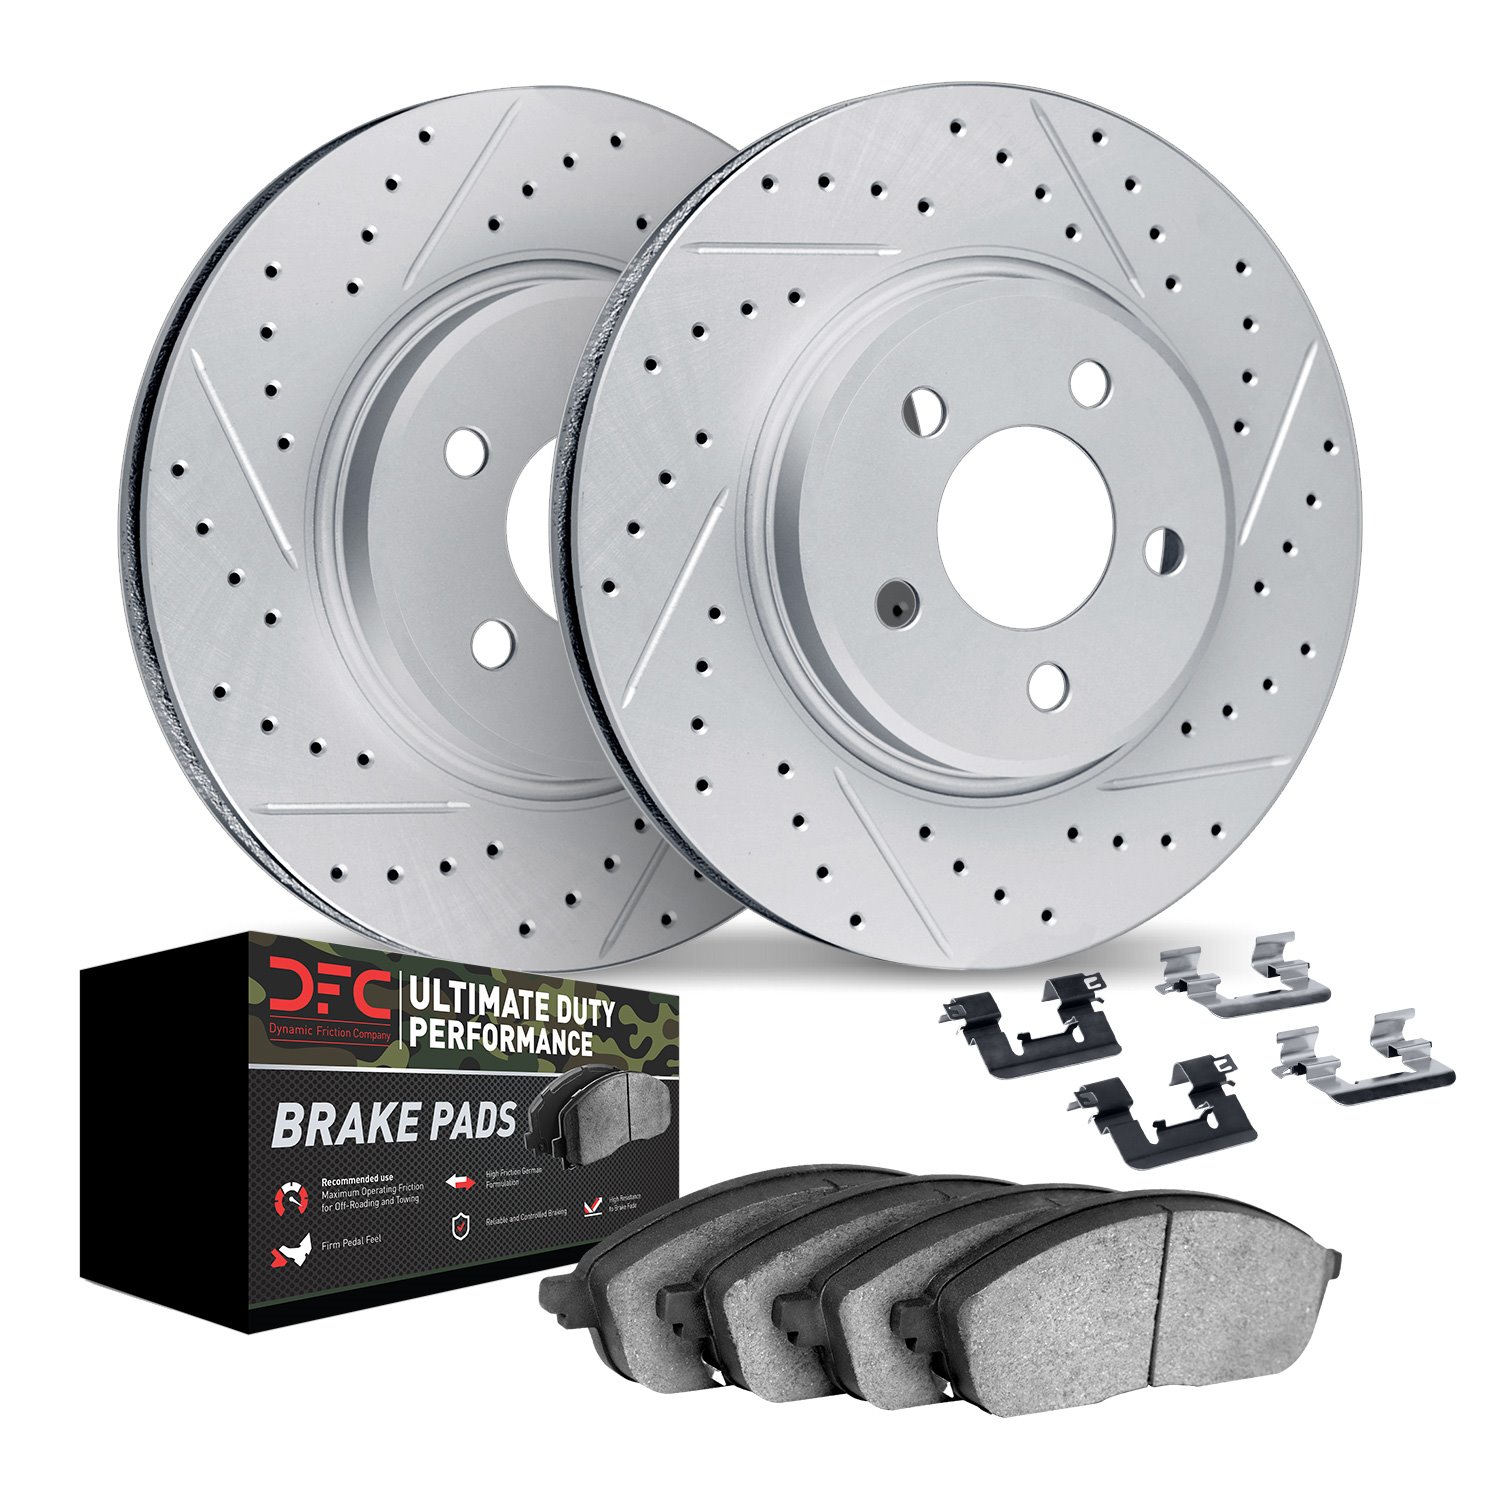 2412-42015 Geoperformance Drilled/Slotted Brake Rotors with Ultimate-Duty Brake Pads Kit & Hardware, Fits Select Mopar, Position